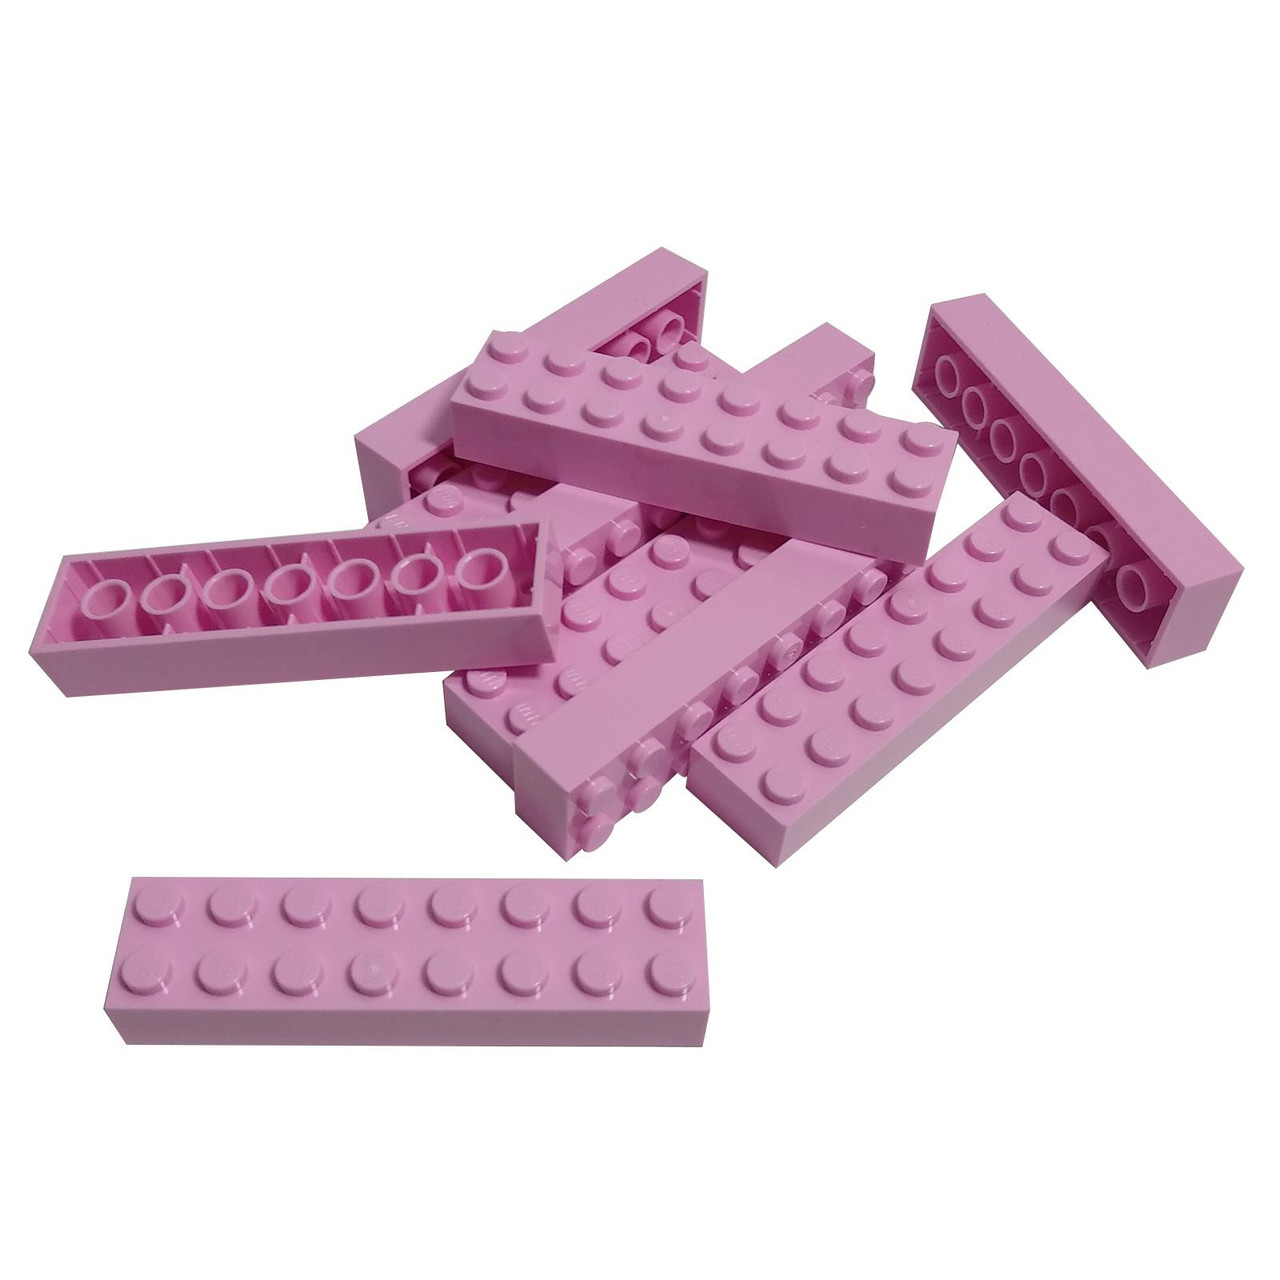 LEGO- NEW #3003-DARK PINK-2 X 2 BRICKS- 50 PIECES